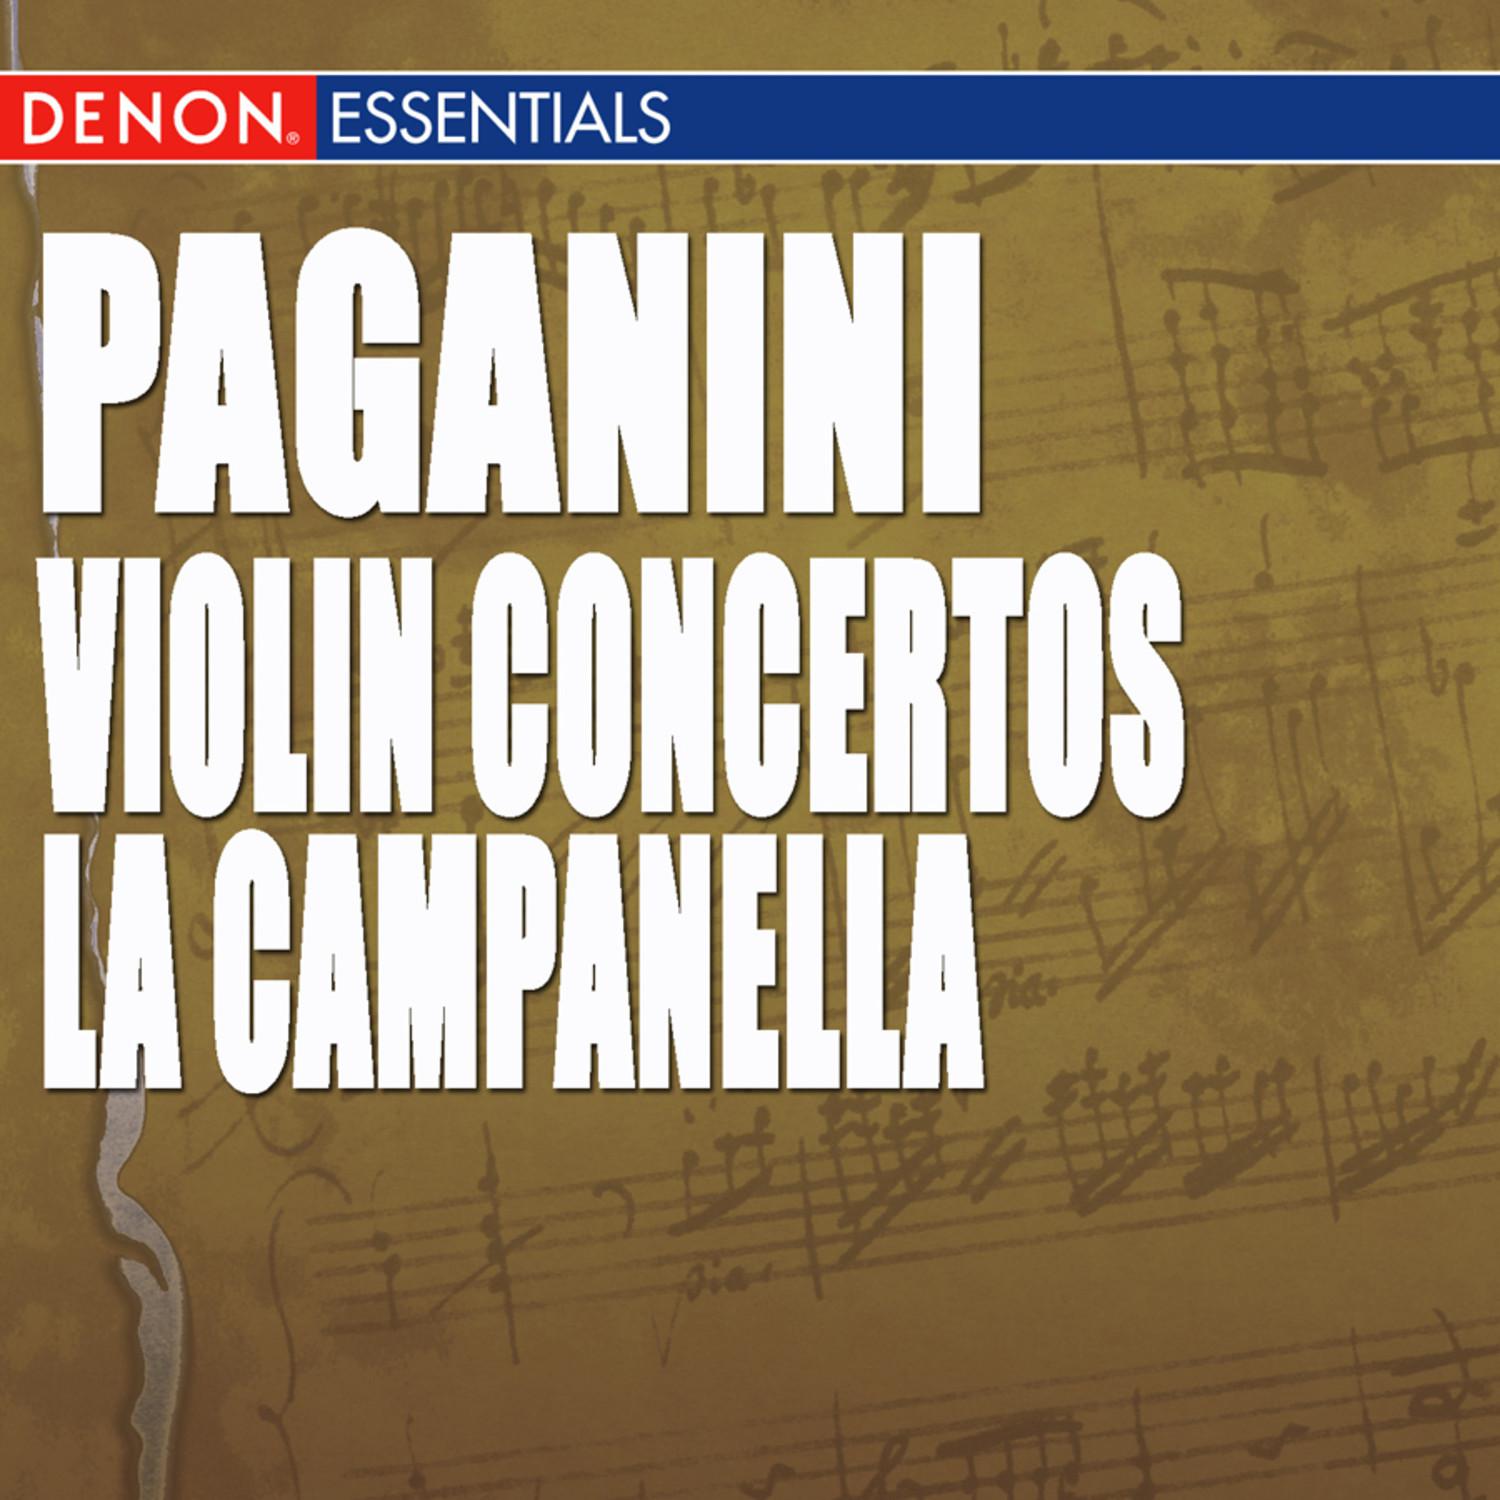 Concerto for Violin and Orchestra No. 1 in D Major, Op. 6: II. Adagio espressivo